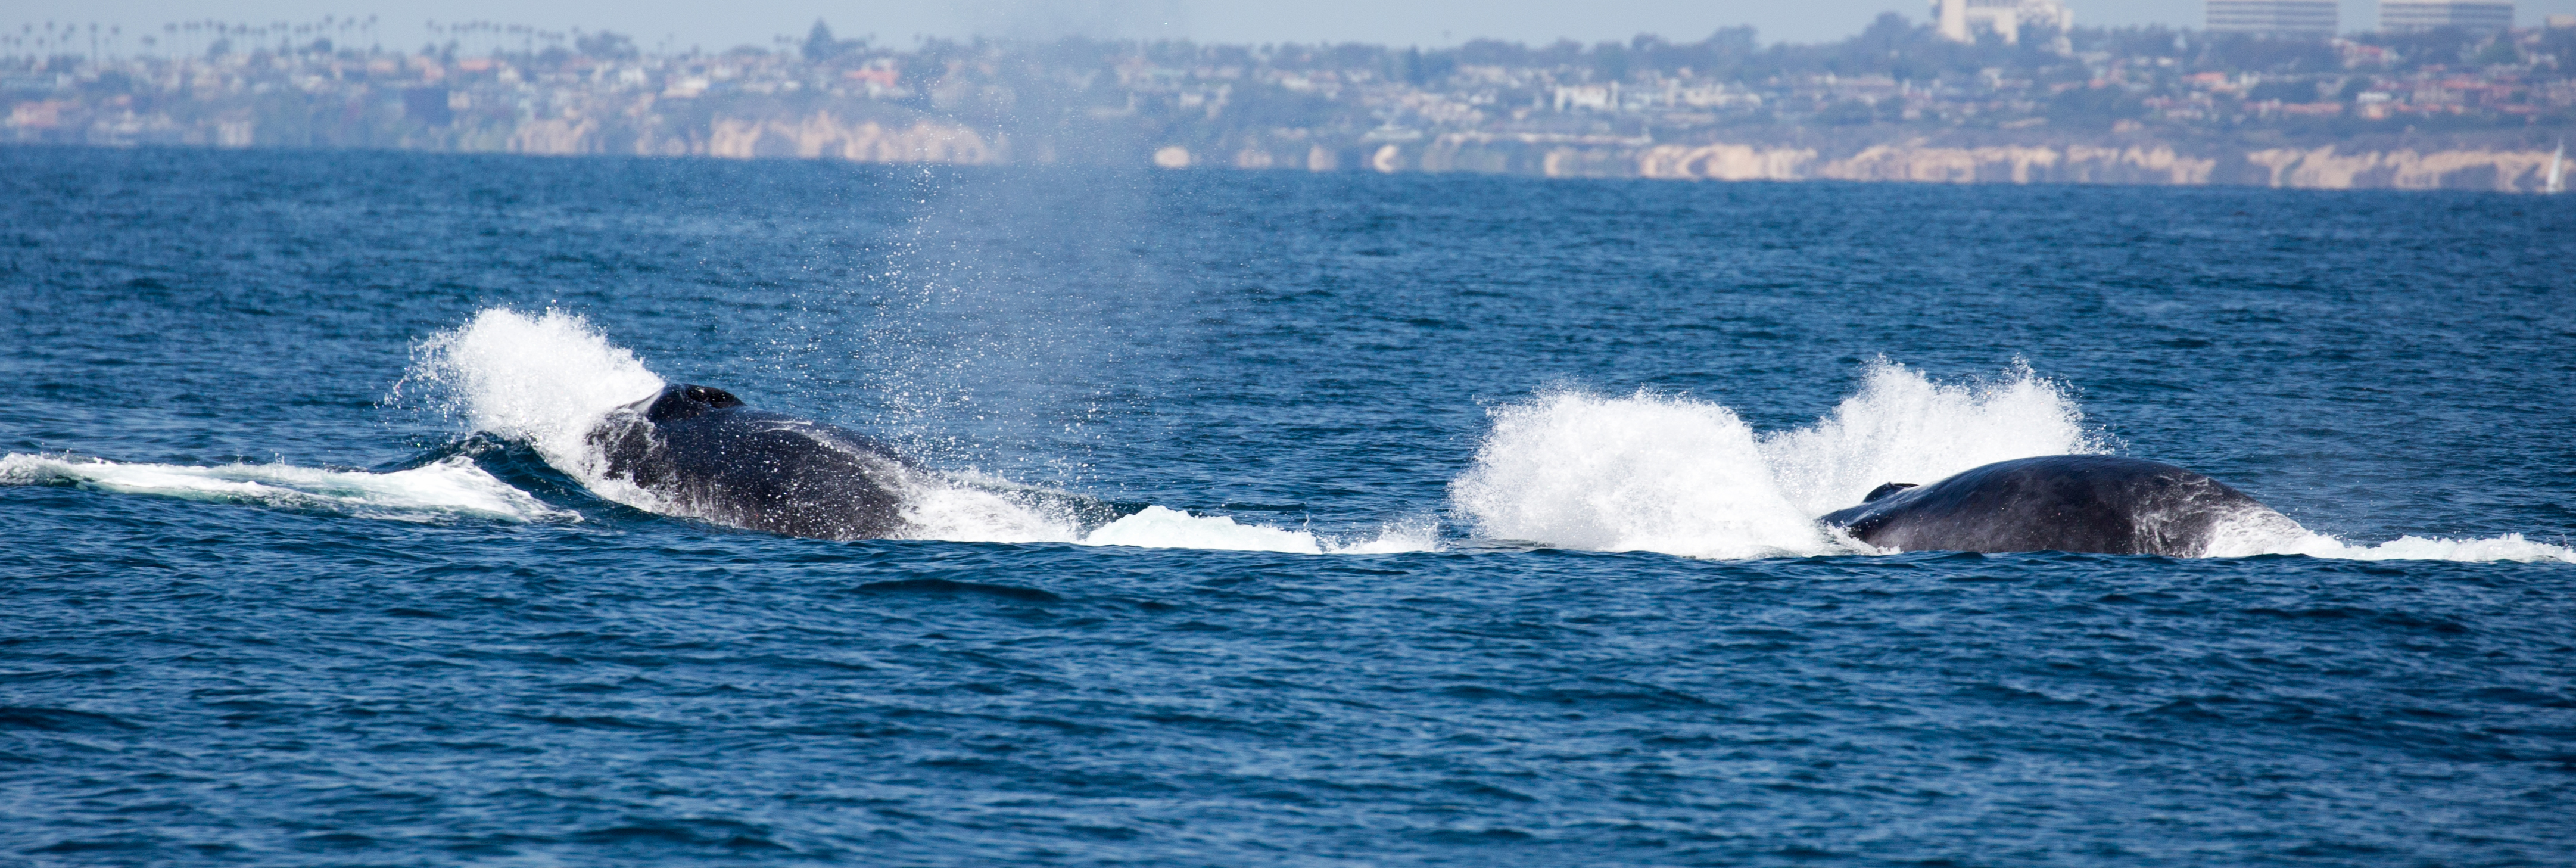 finback-whale-watching-Redondo-beach-tours